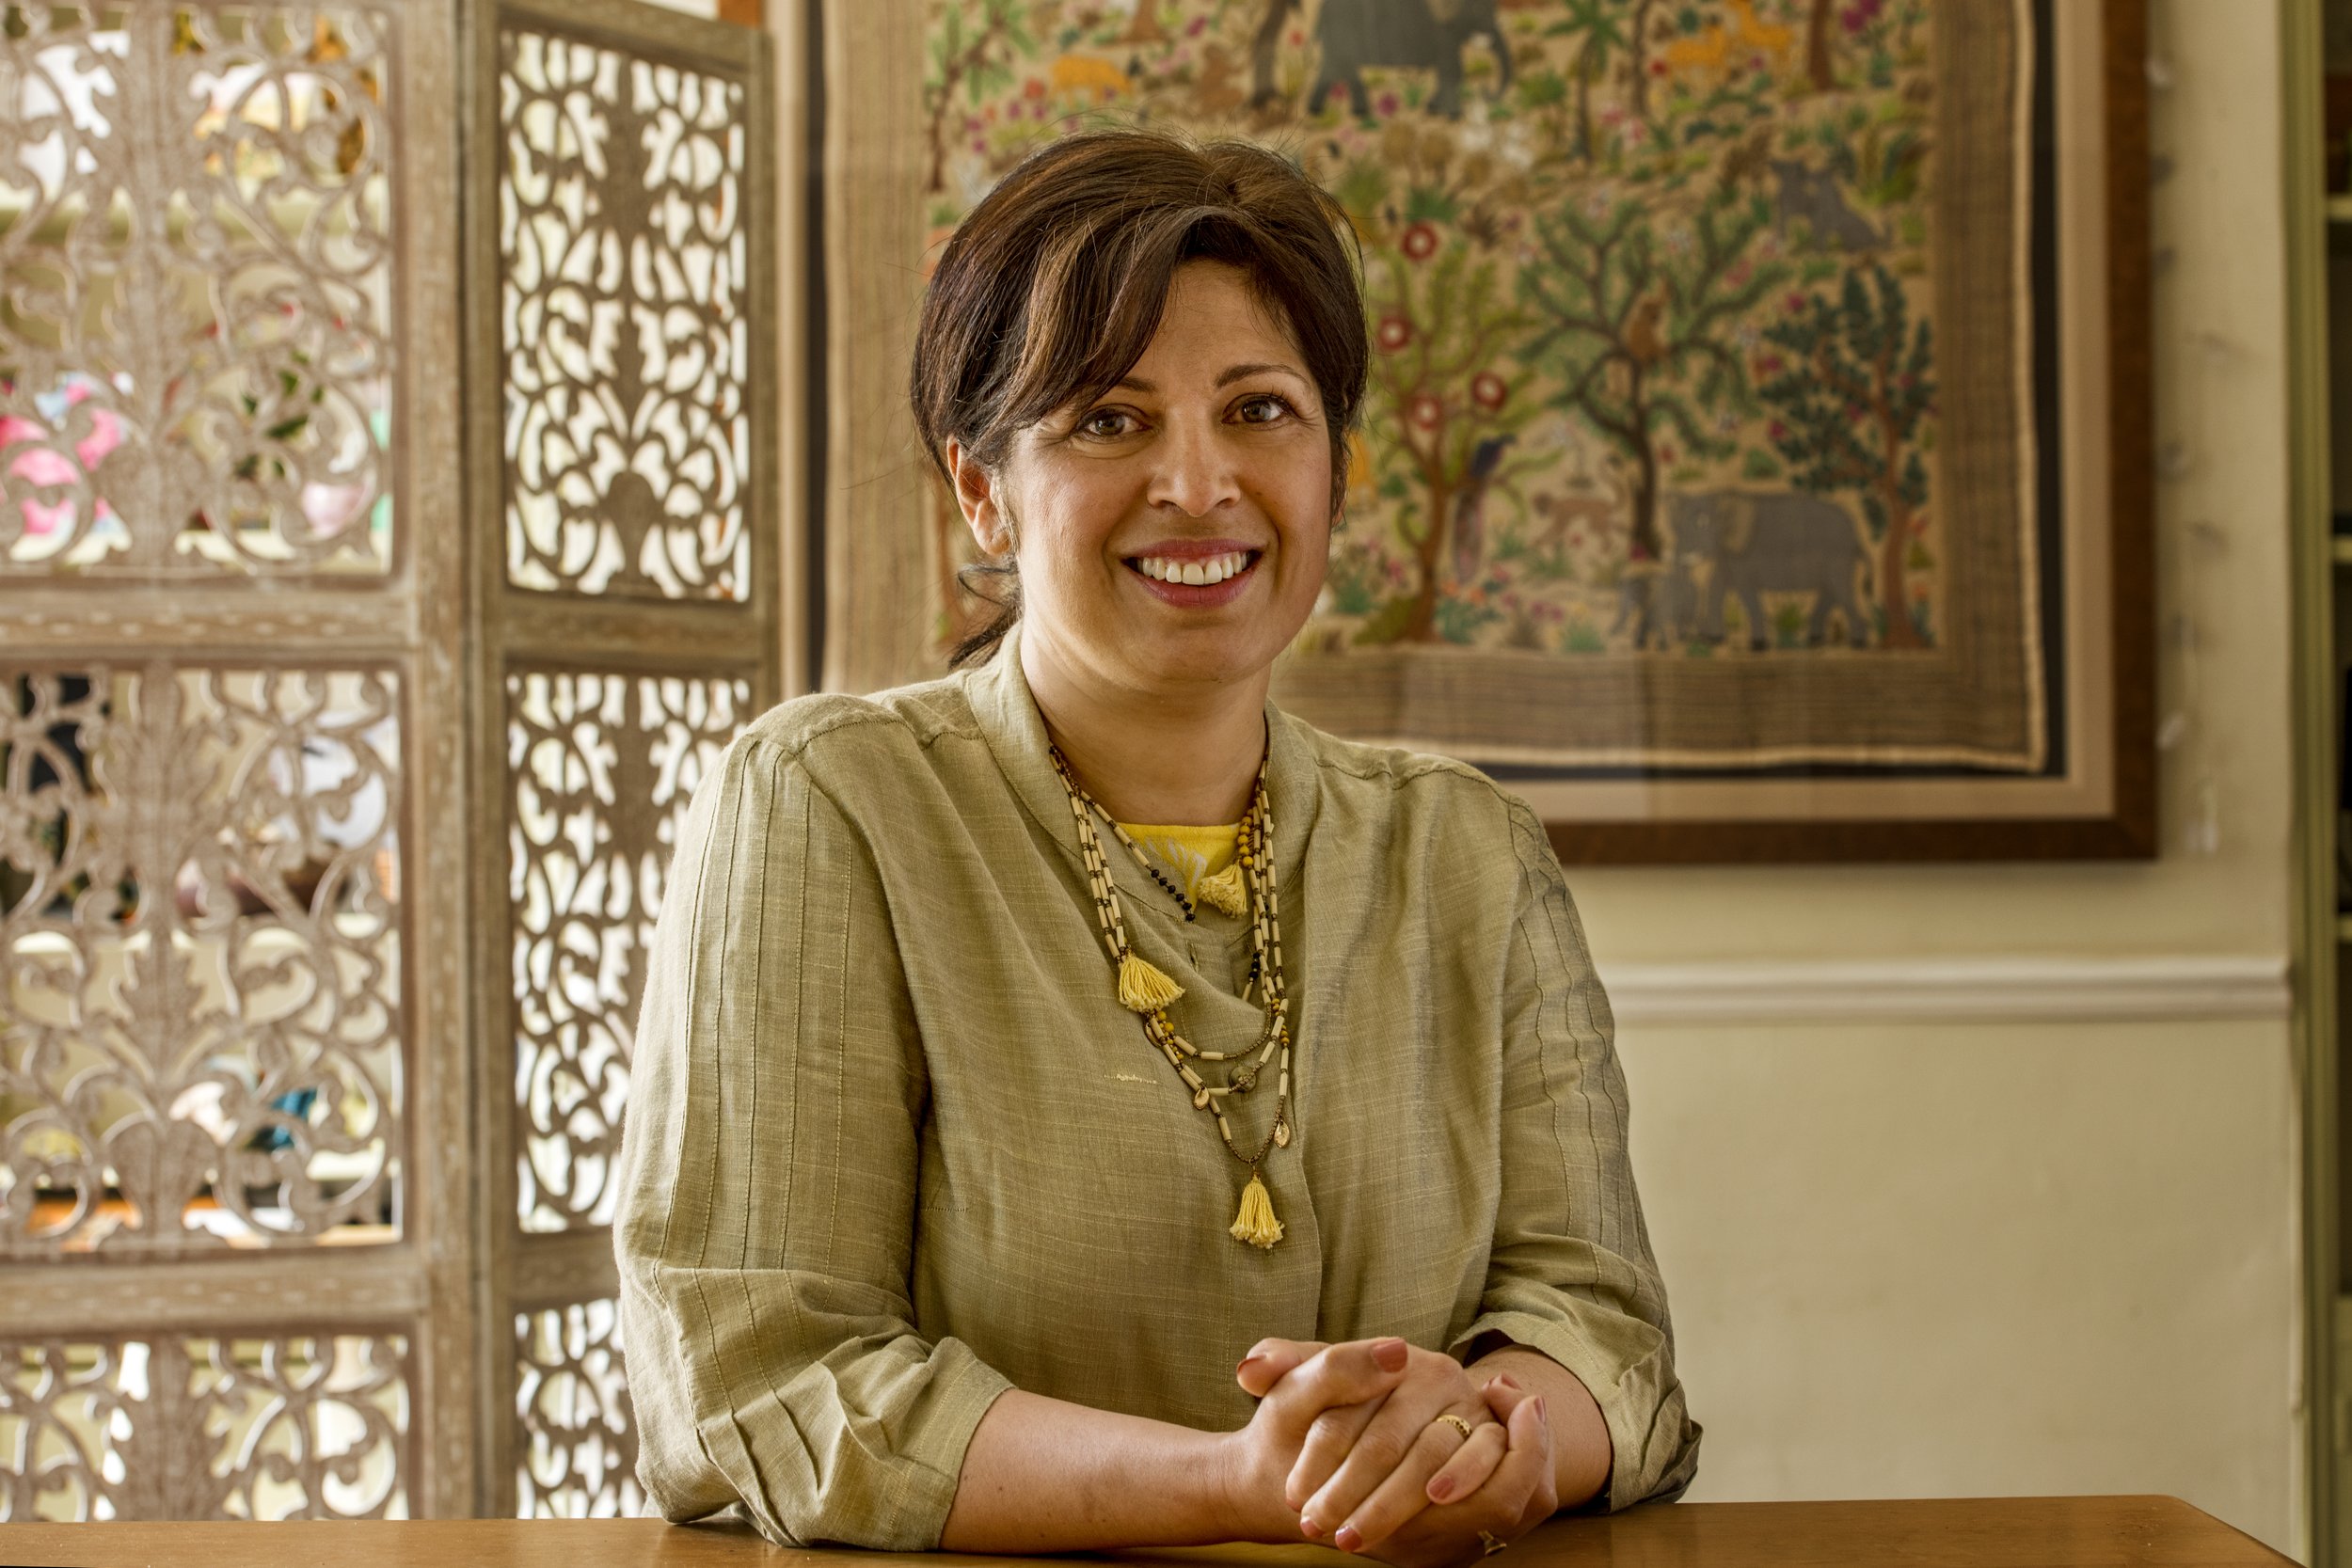                                                                                 Sita Brahmachari - Author